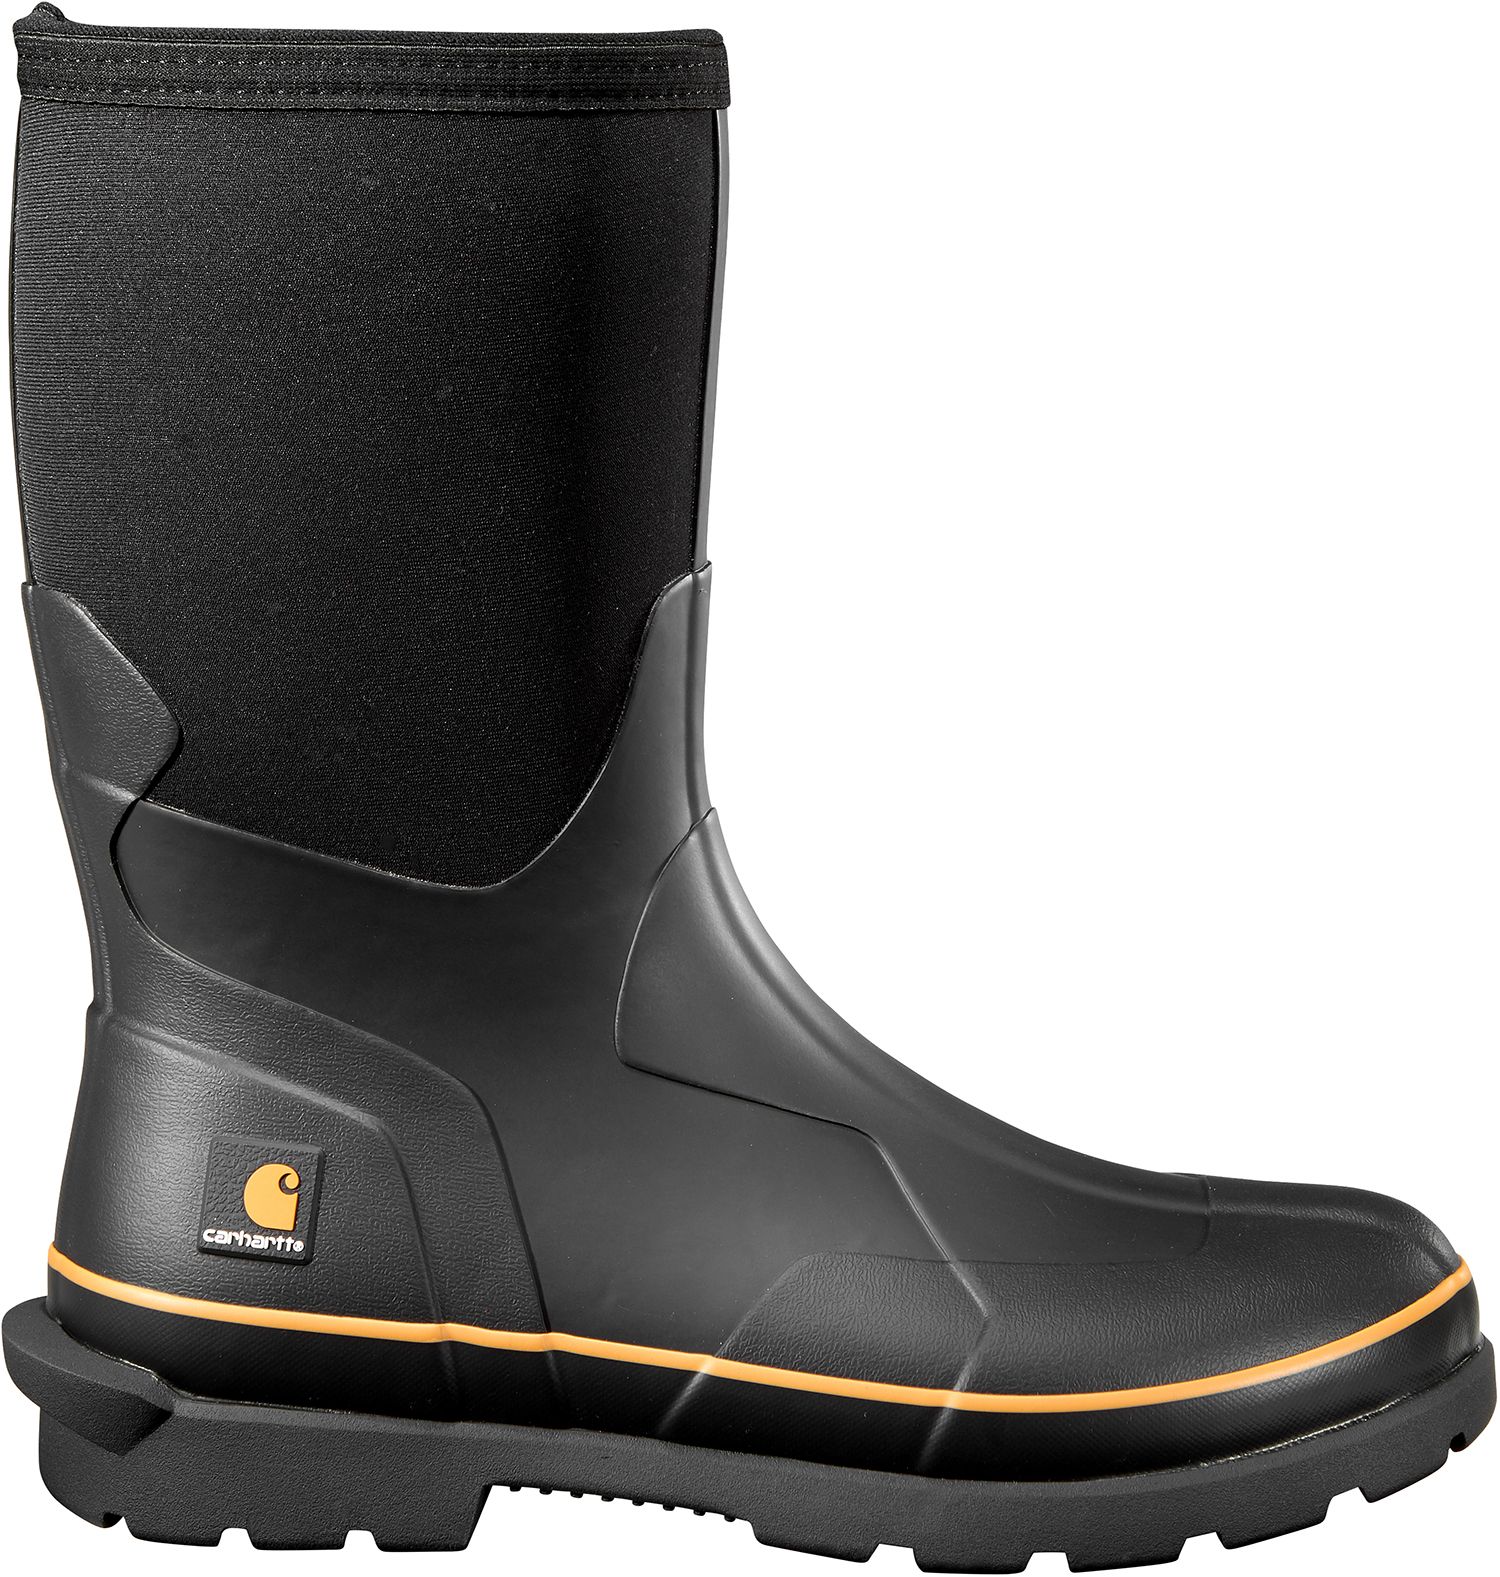 carhartt snow boots